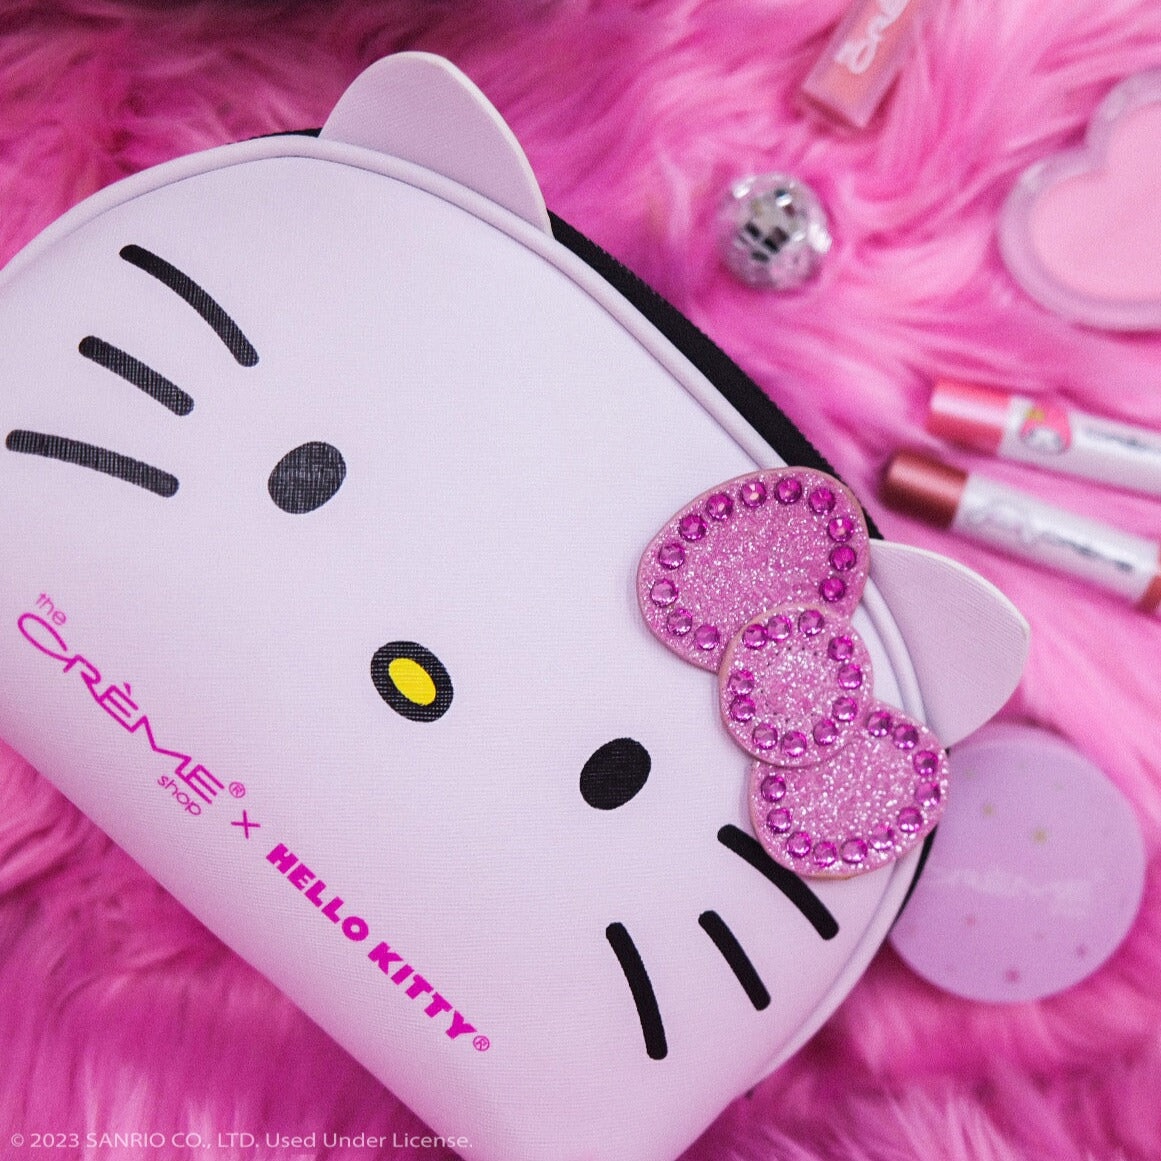 Hello Kitty Con packs plenty of fans and cuteness